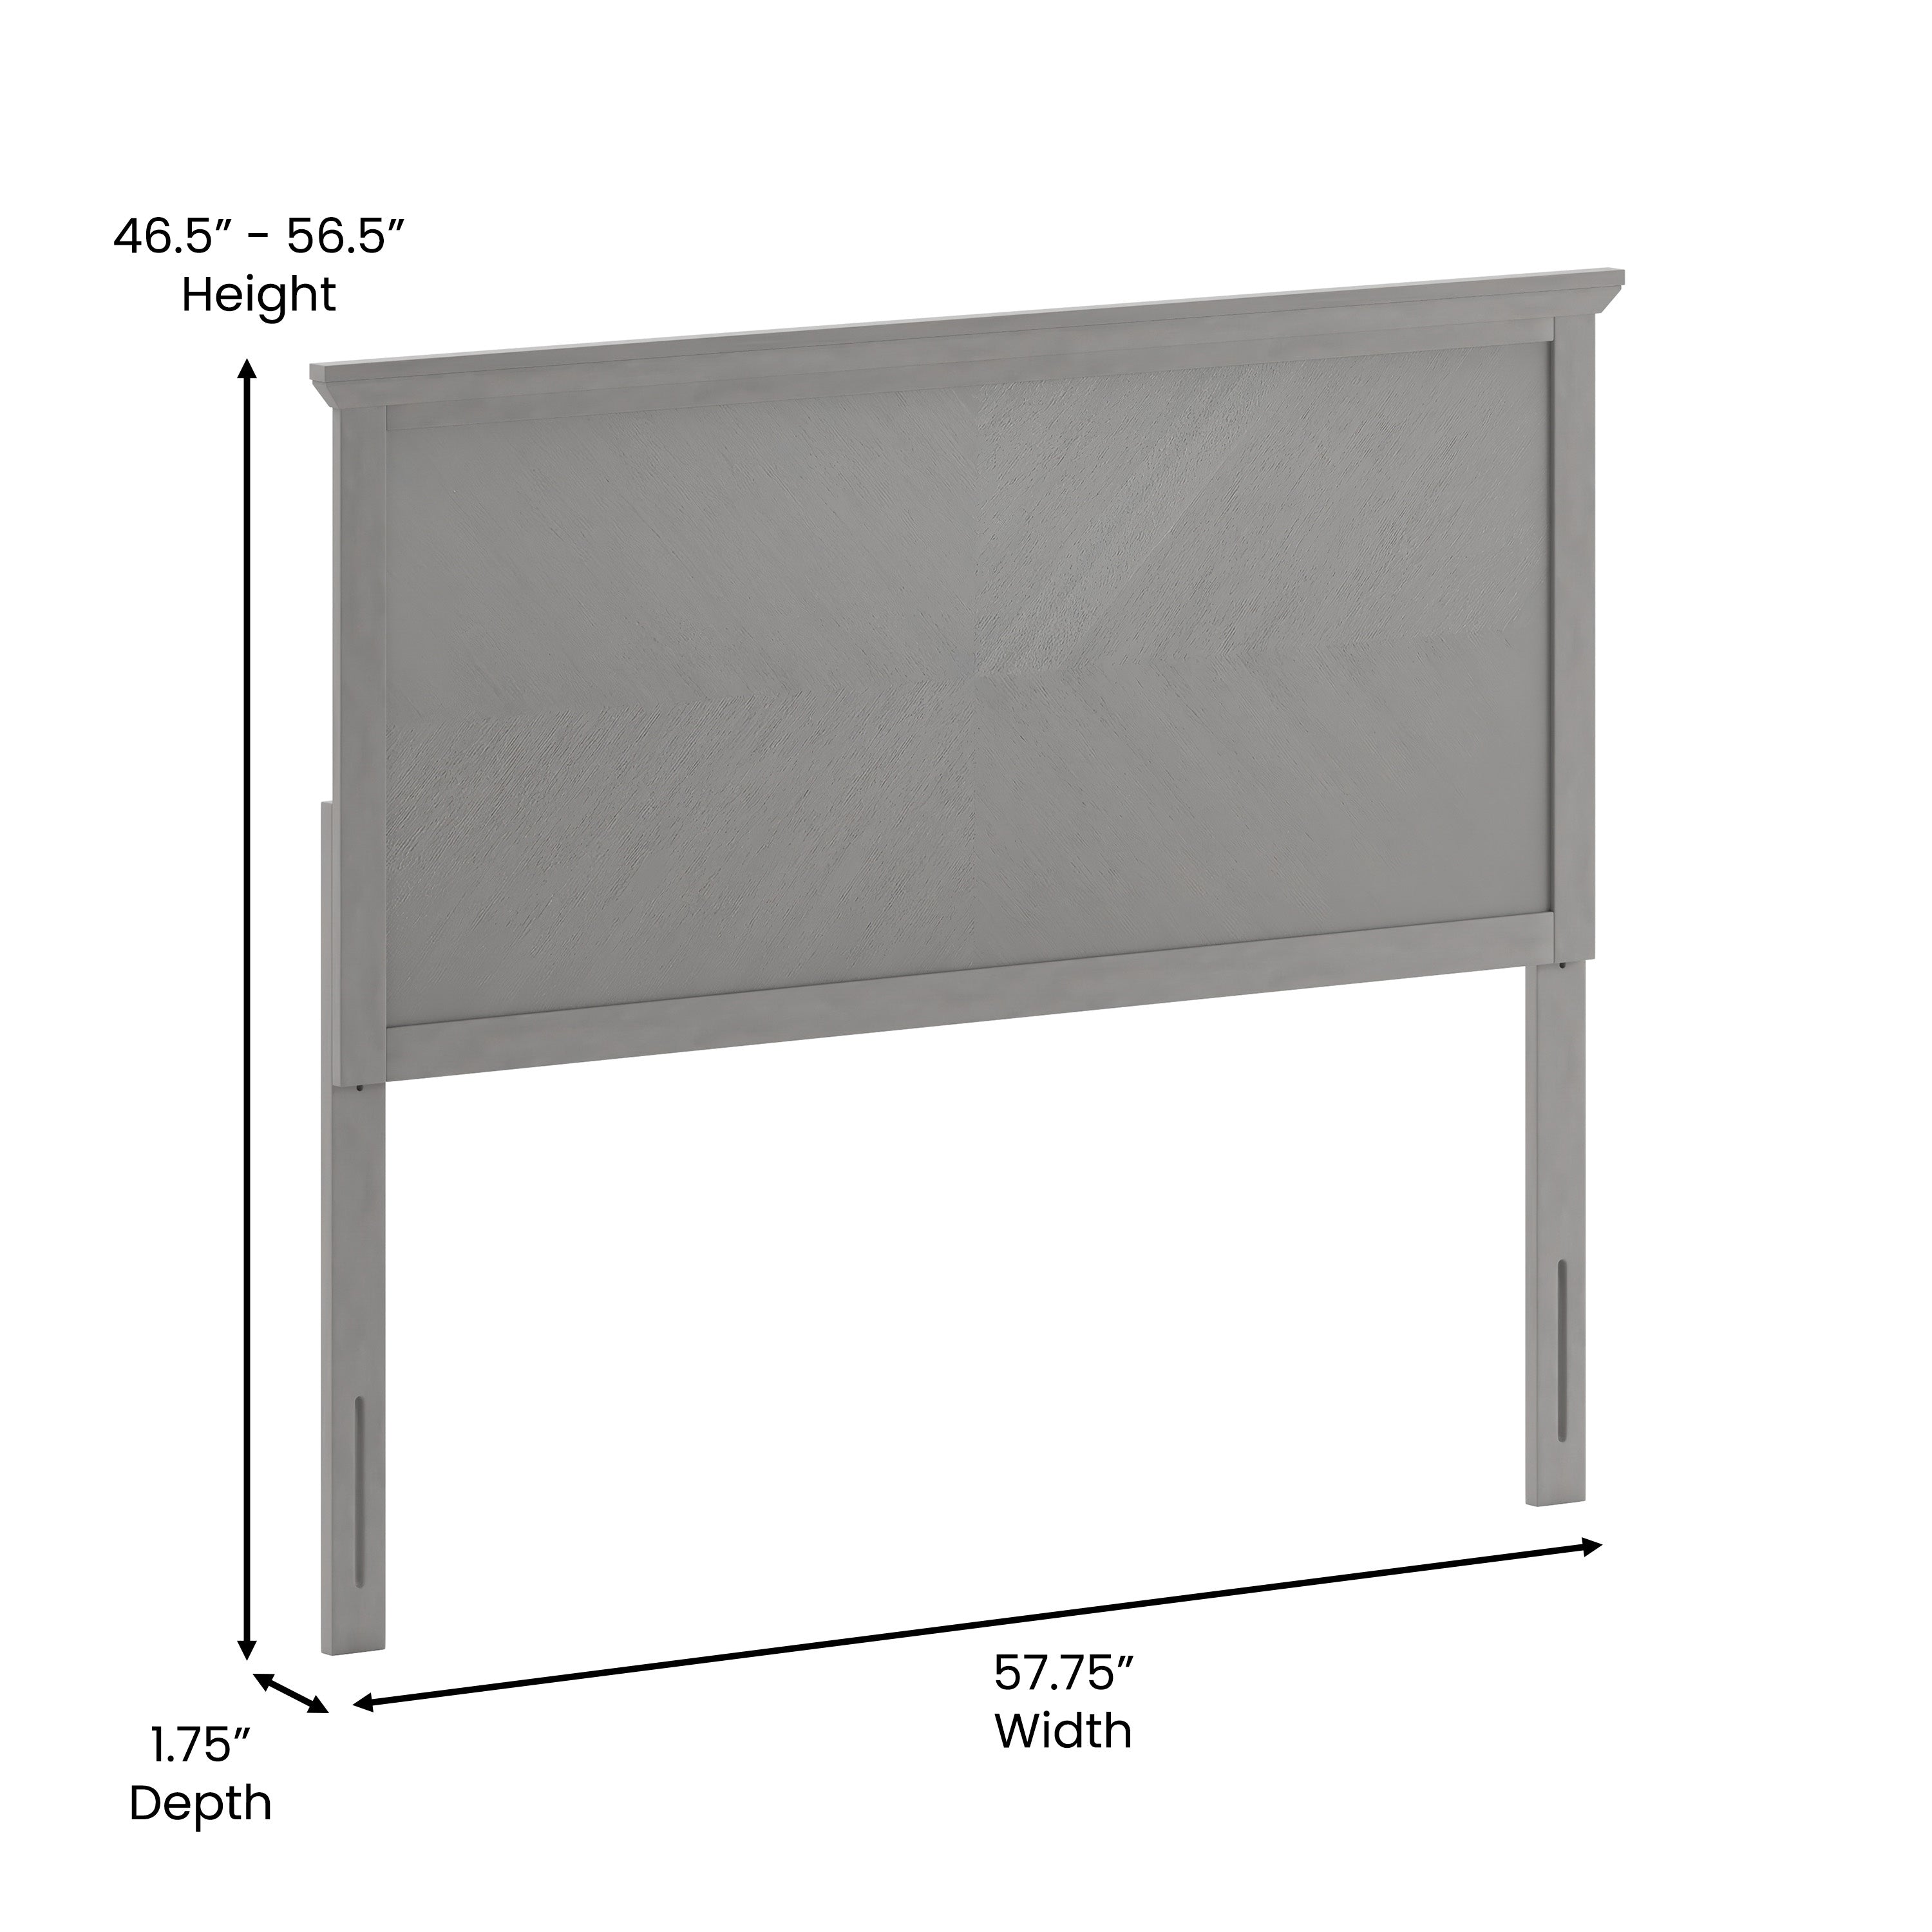 Fiona Herring Bone Wooden Adjustable Headboard for Universal Metal Bed Frames-Headboard-Flash Furniture-Wall2Wall Furnishings